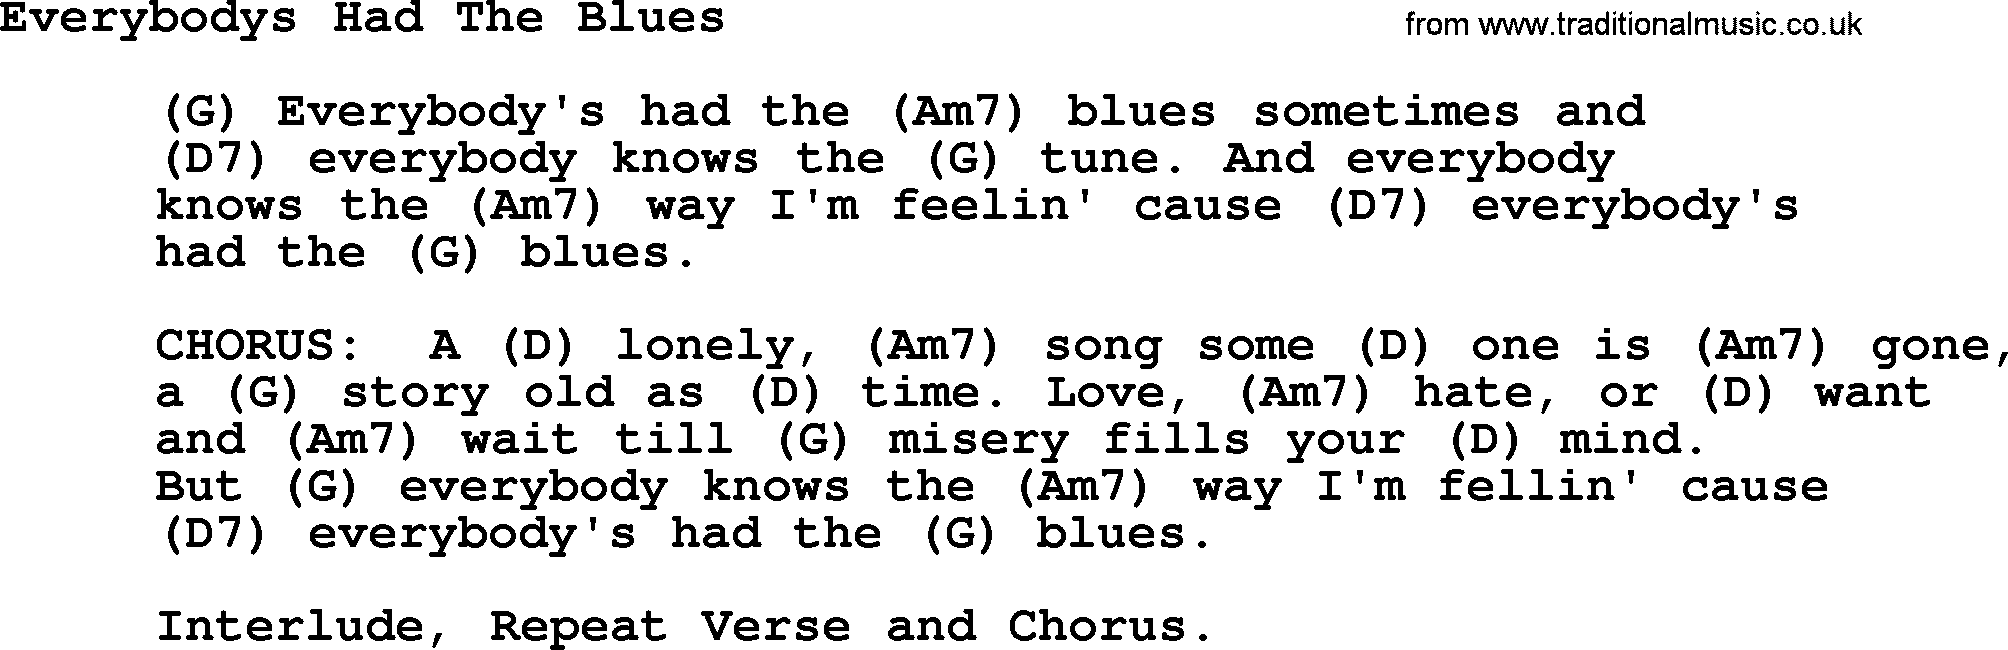 Merle Haggard song: Everybodys Had The Blues, lyrics and chords